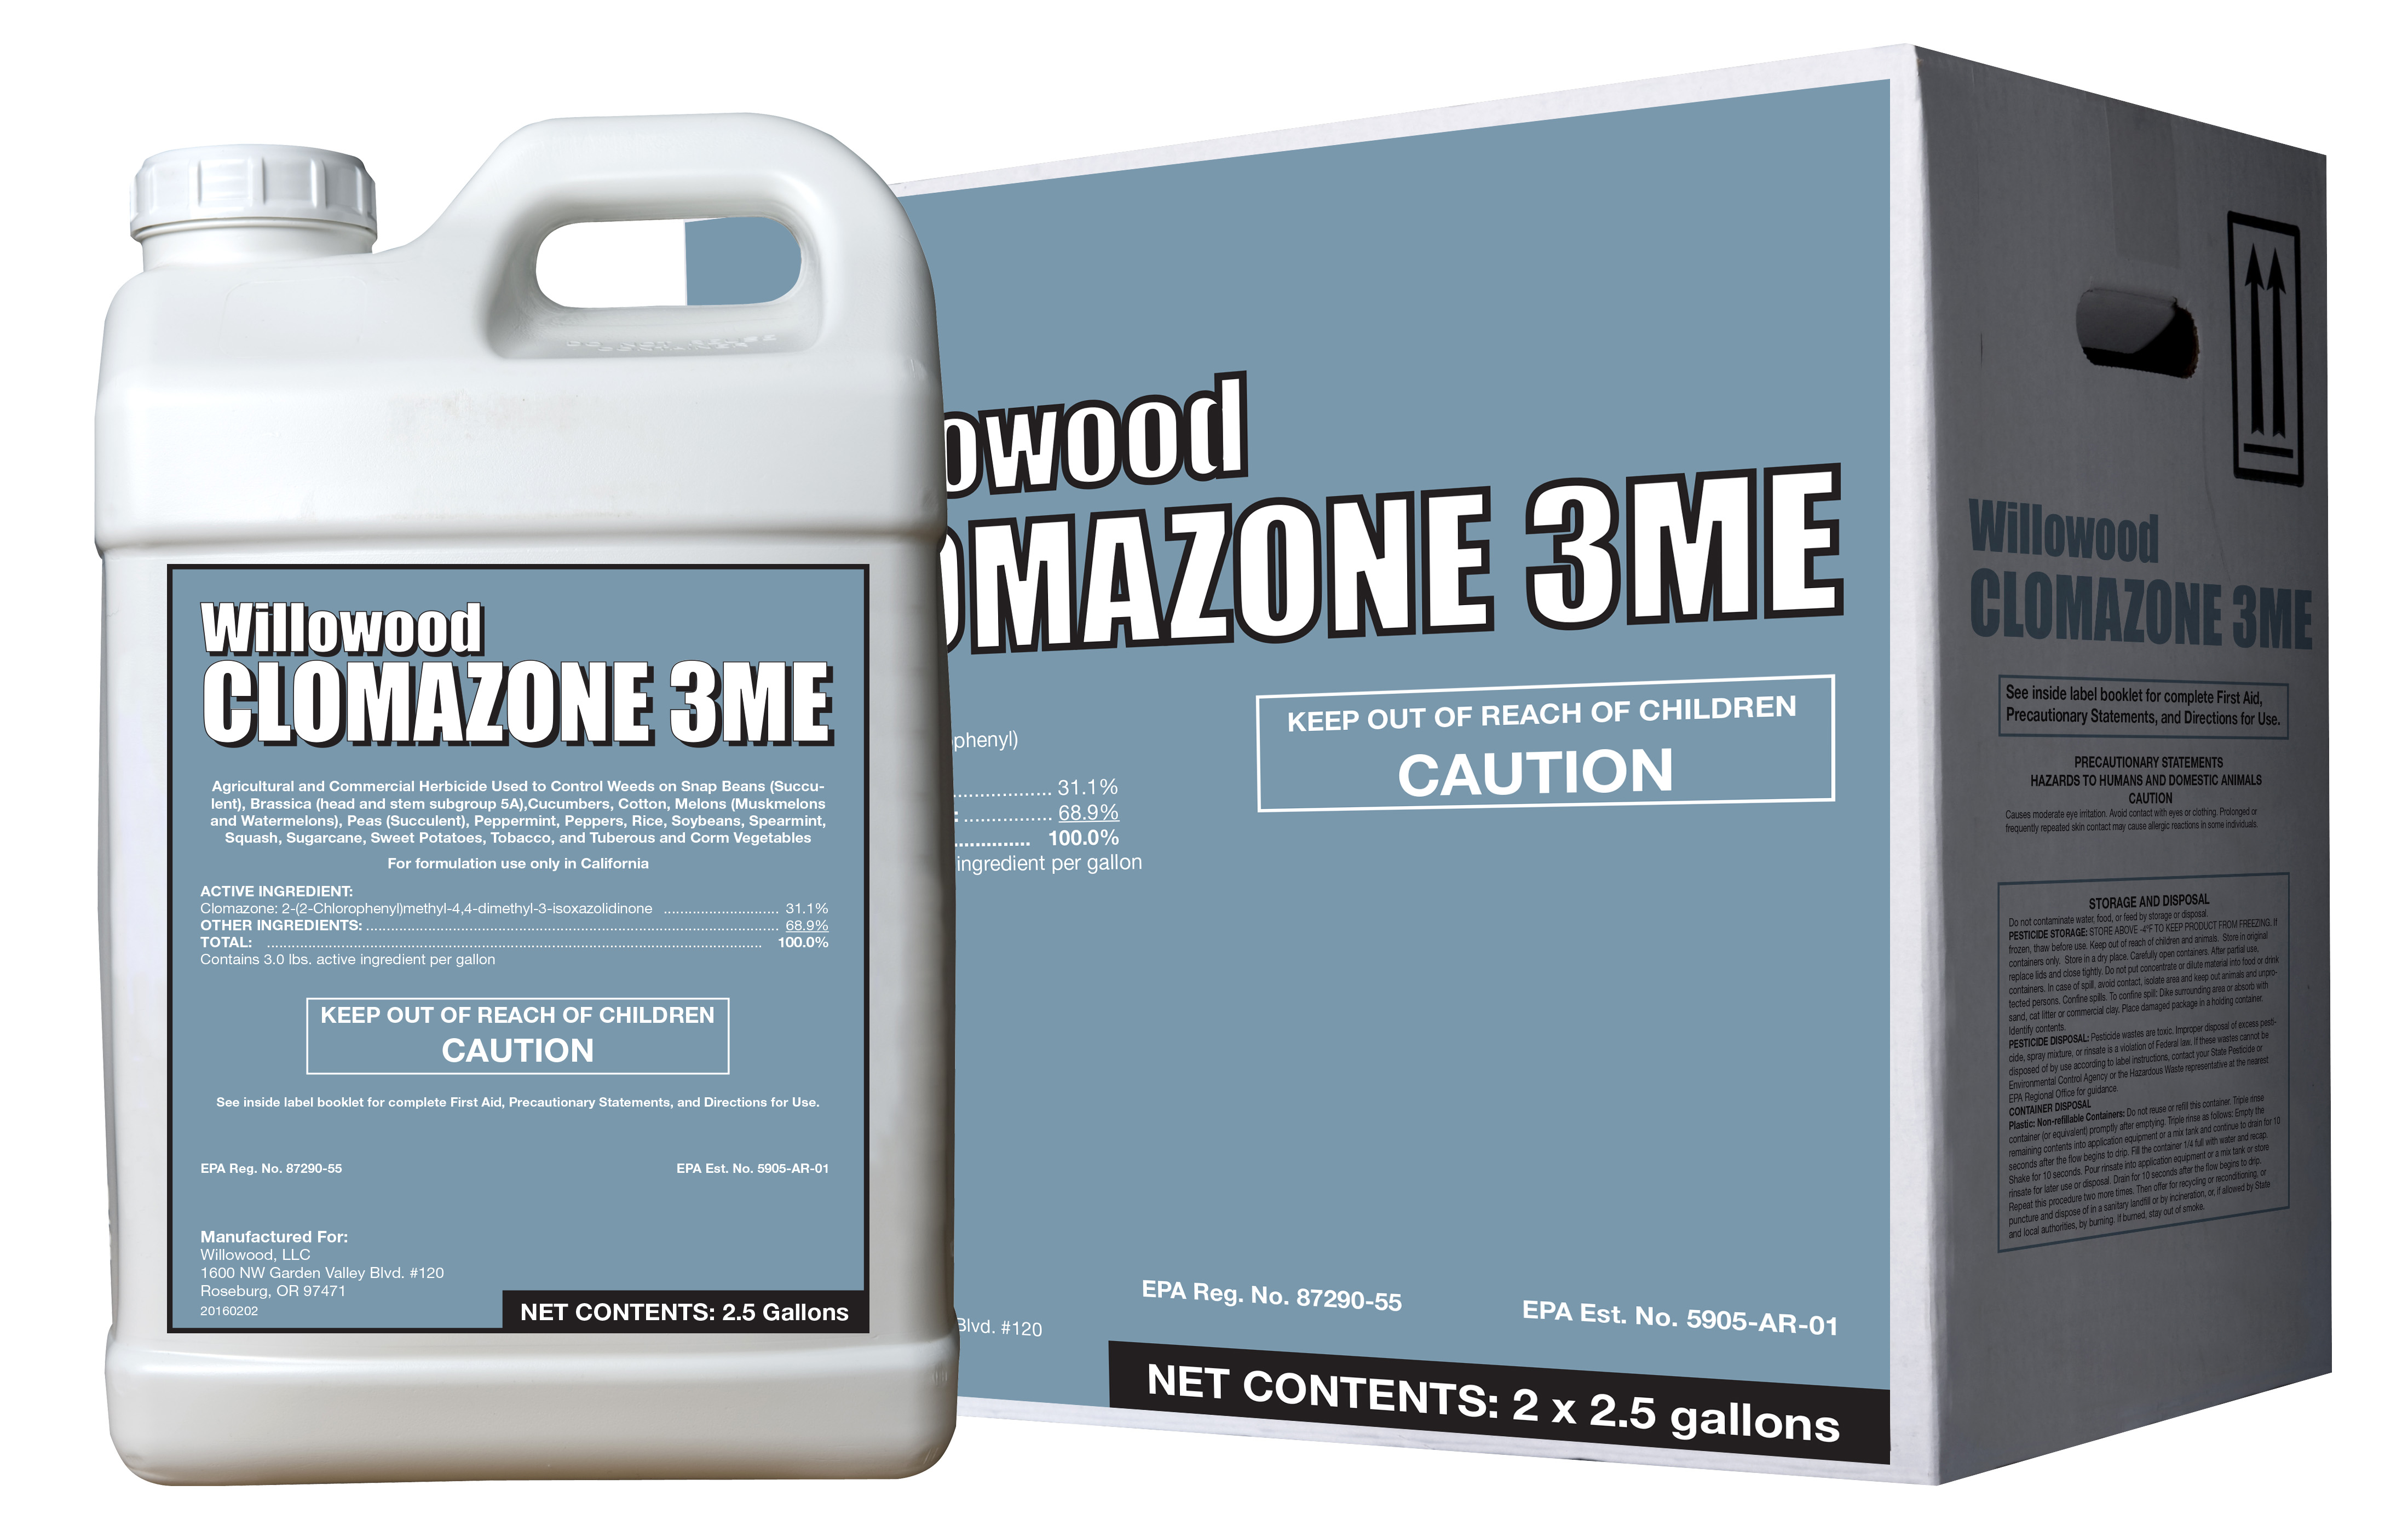 Clomazone 3ME box and jug